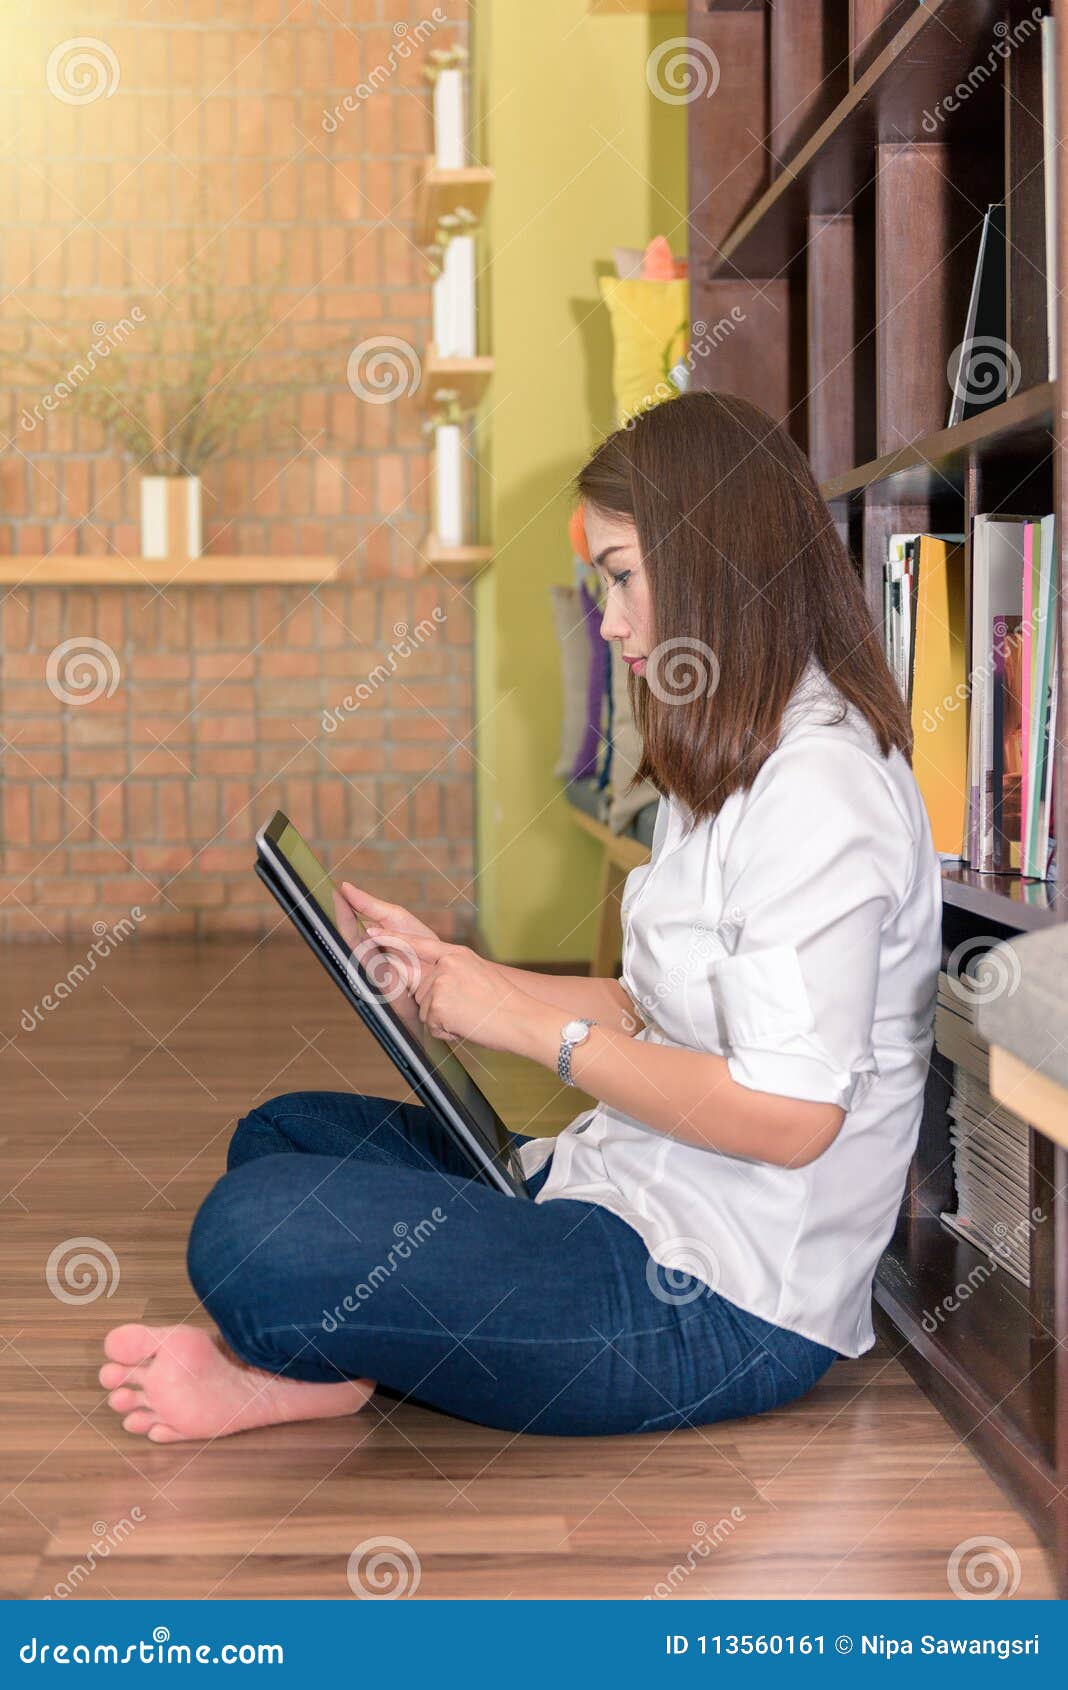 Она сидит в библиотеке. Студентка в библиотеке сидит. Девушка сидит в библиотеке. Женщина сидит на библиотечной лестнице. Девушка сидя в библиотеке показала грудь.